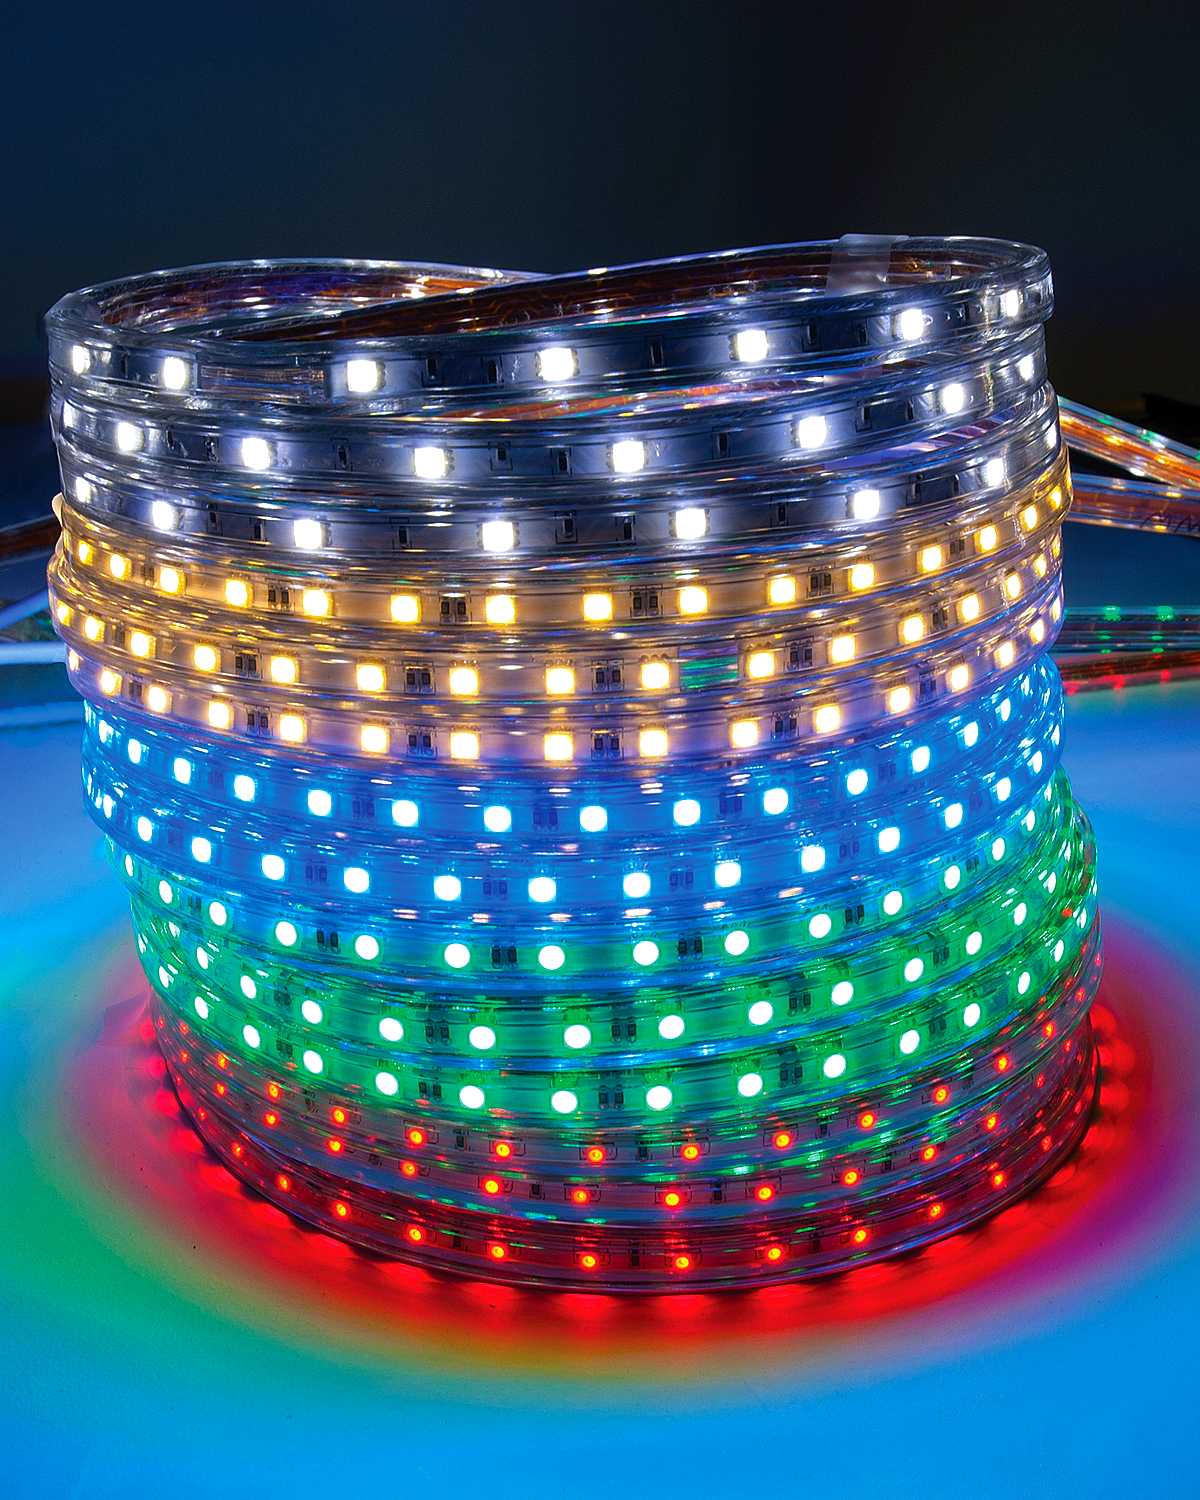 Outwater’s Single, Double, Triple and Single RGB Premium LED Ribbon Flex Lighting